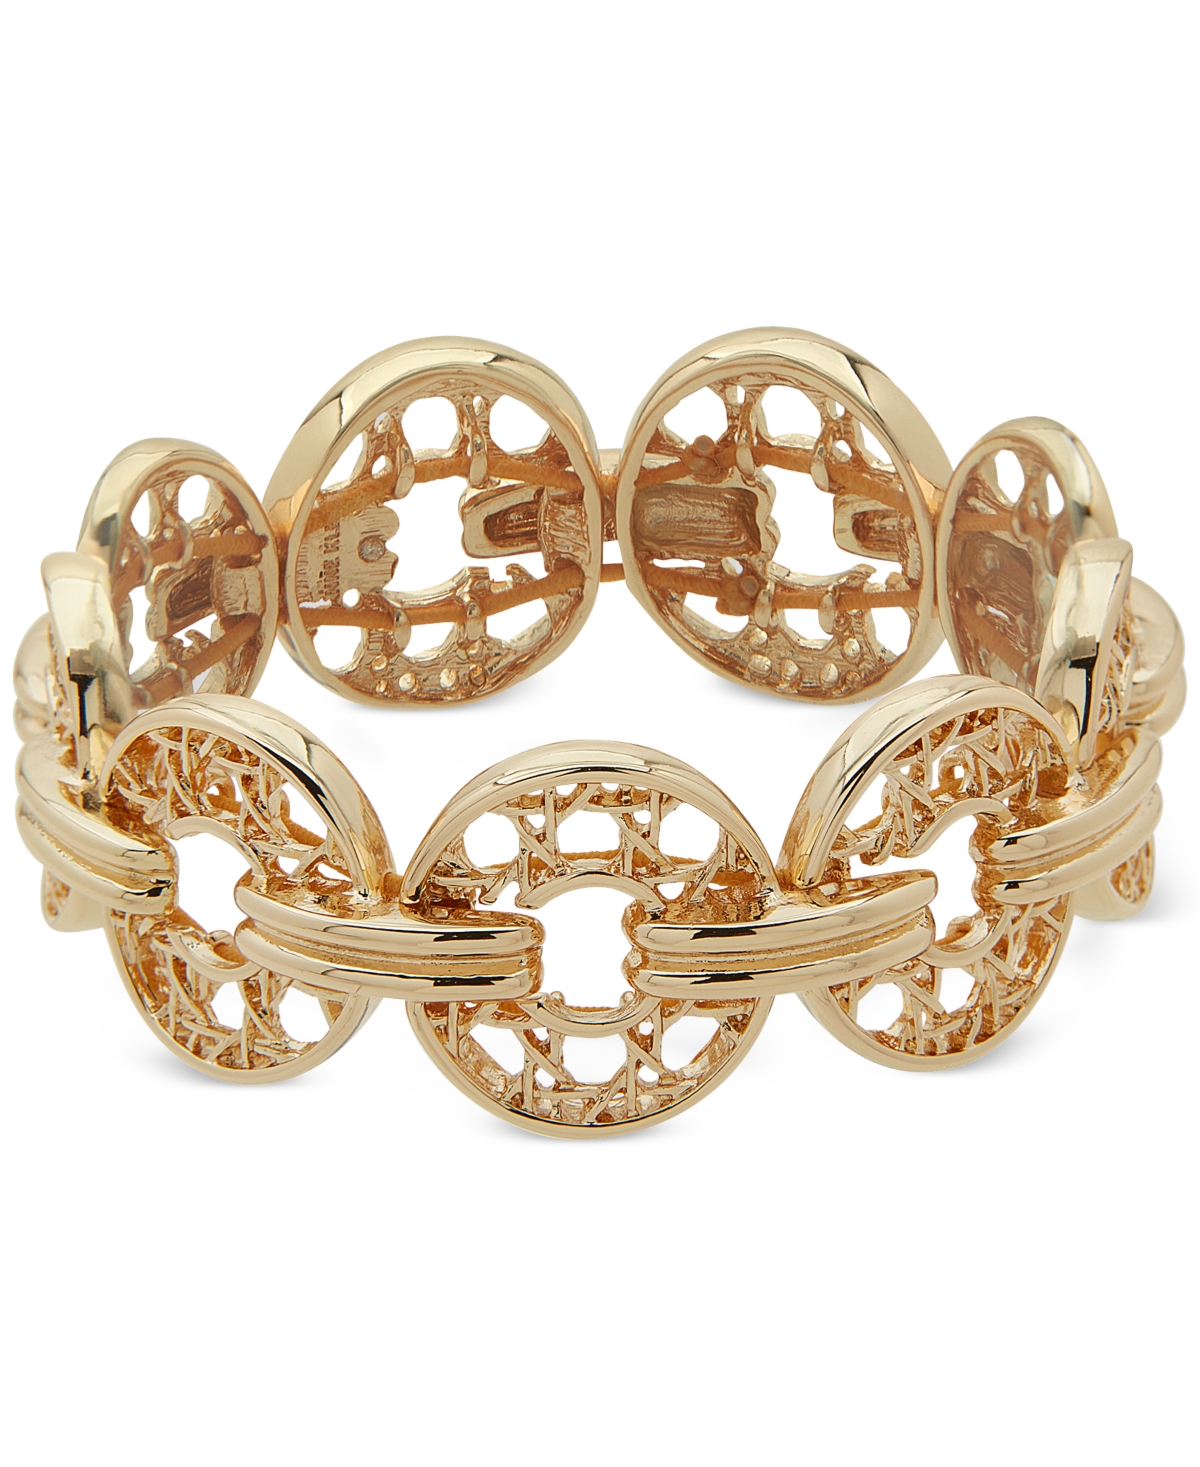 Gold-Tone Lattice Woven Ring Stretch Bracelet - Gold